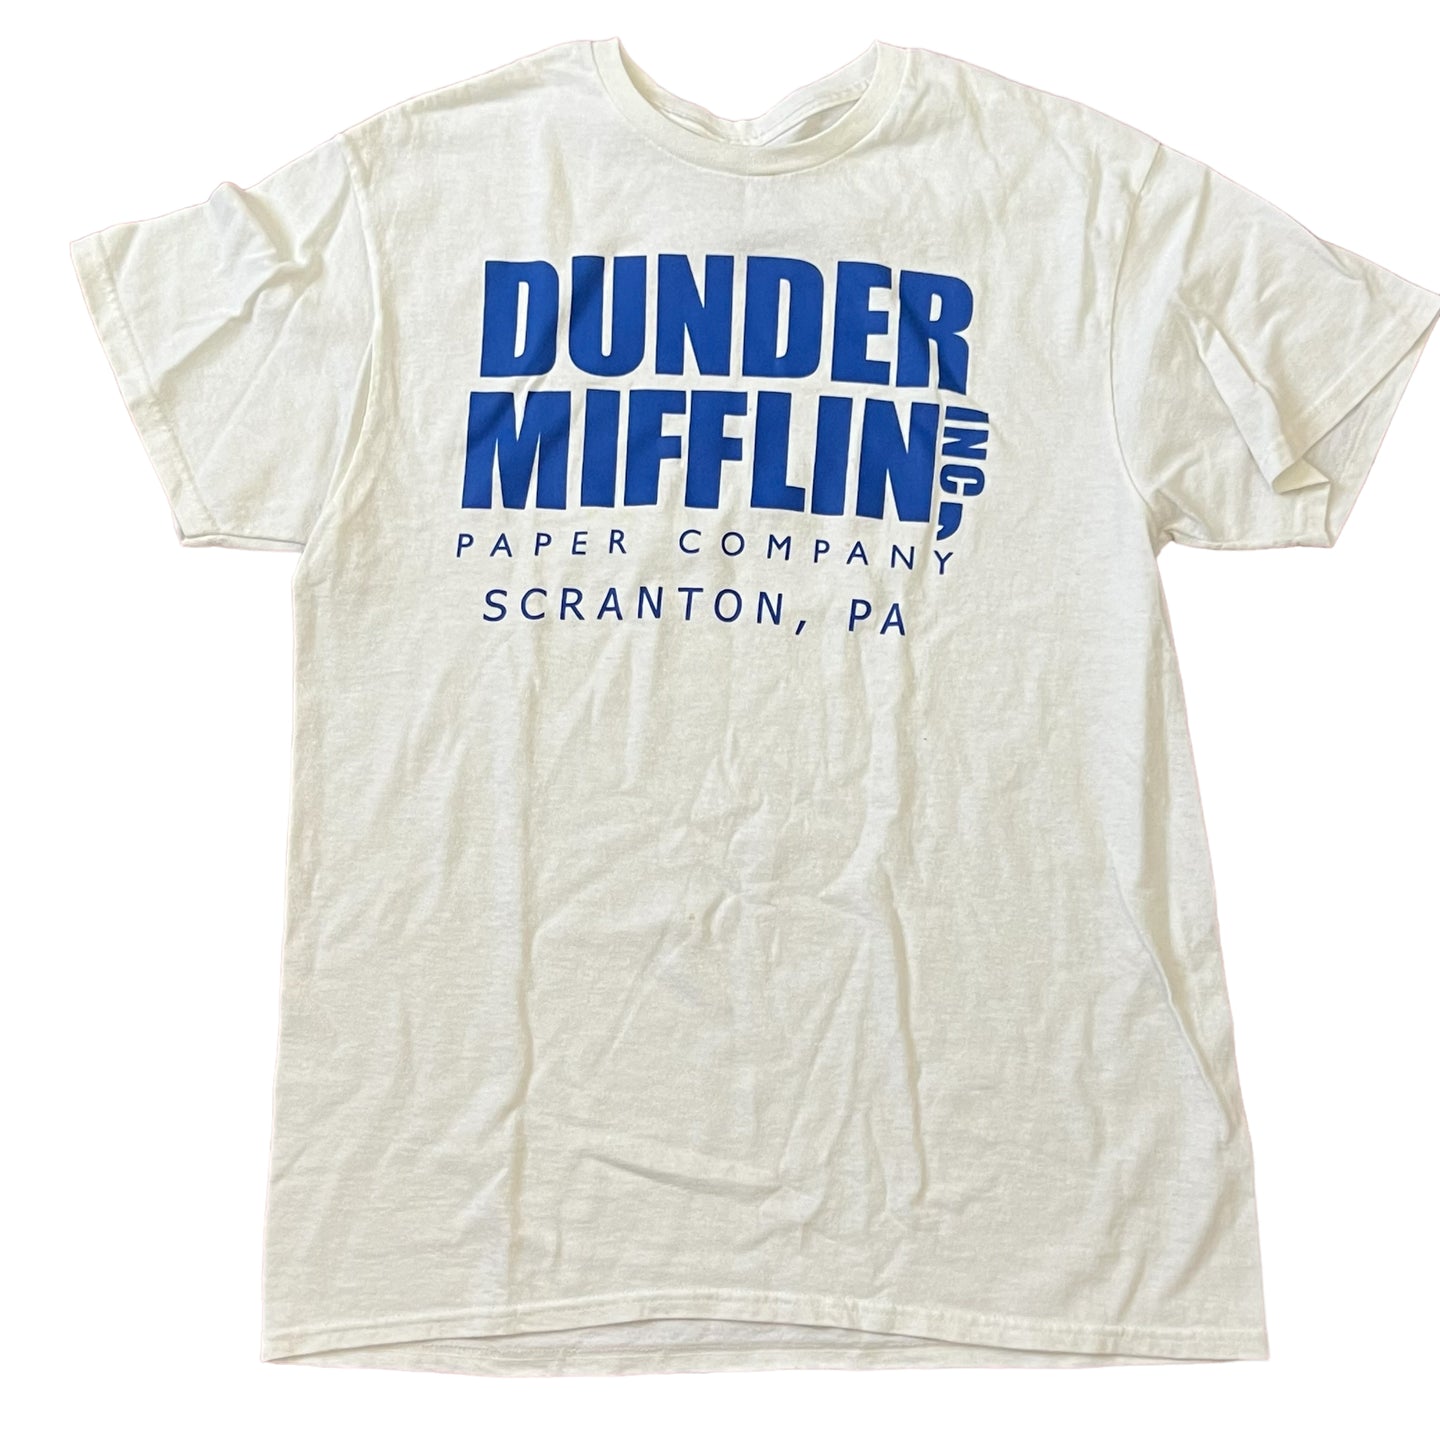 Dunder Mifflin Paper Company Scranton PA T-shirt Size Medium